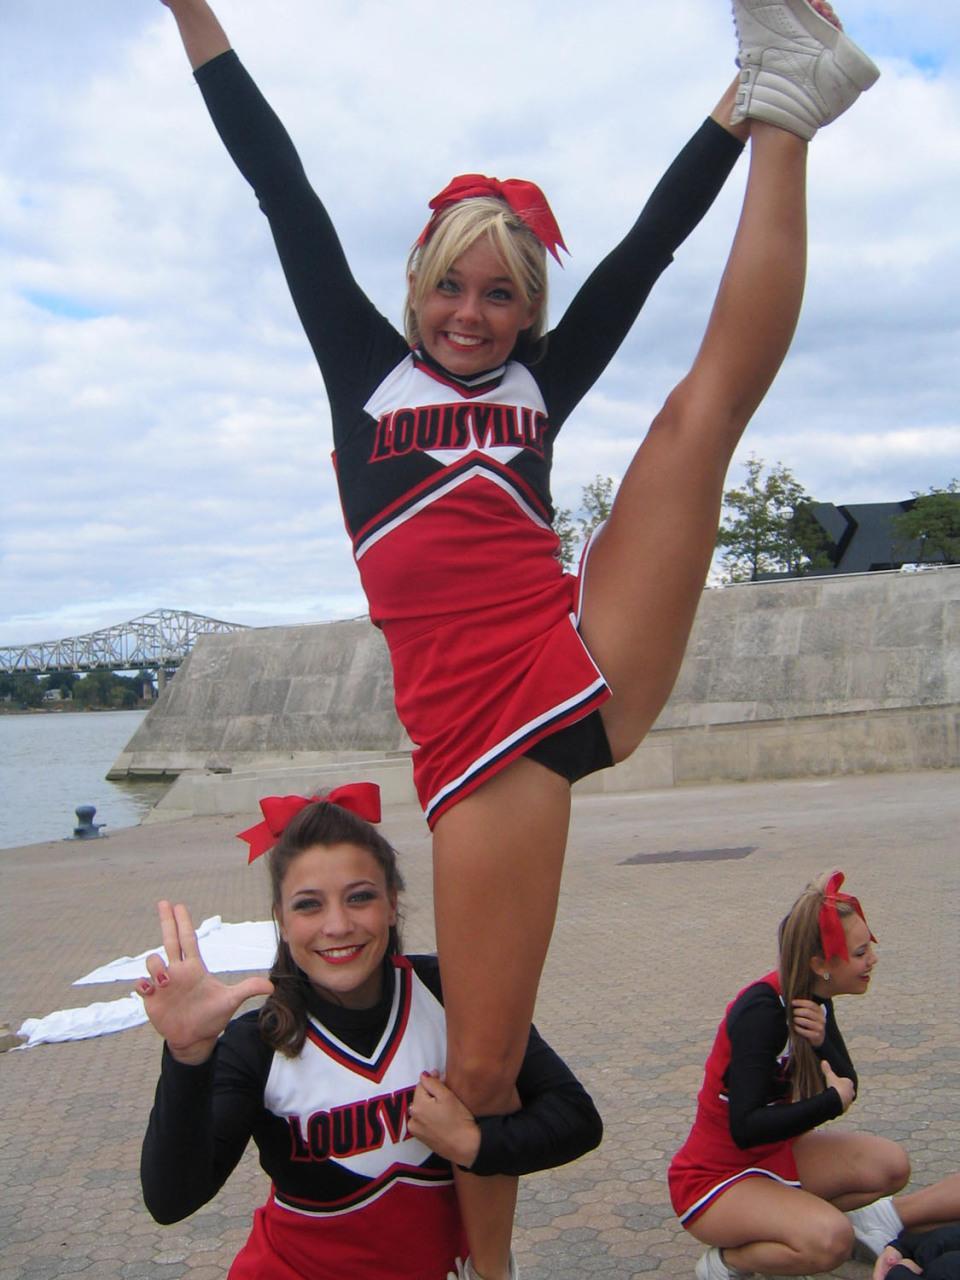 Cheerleading Upskirt Pictures